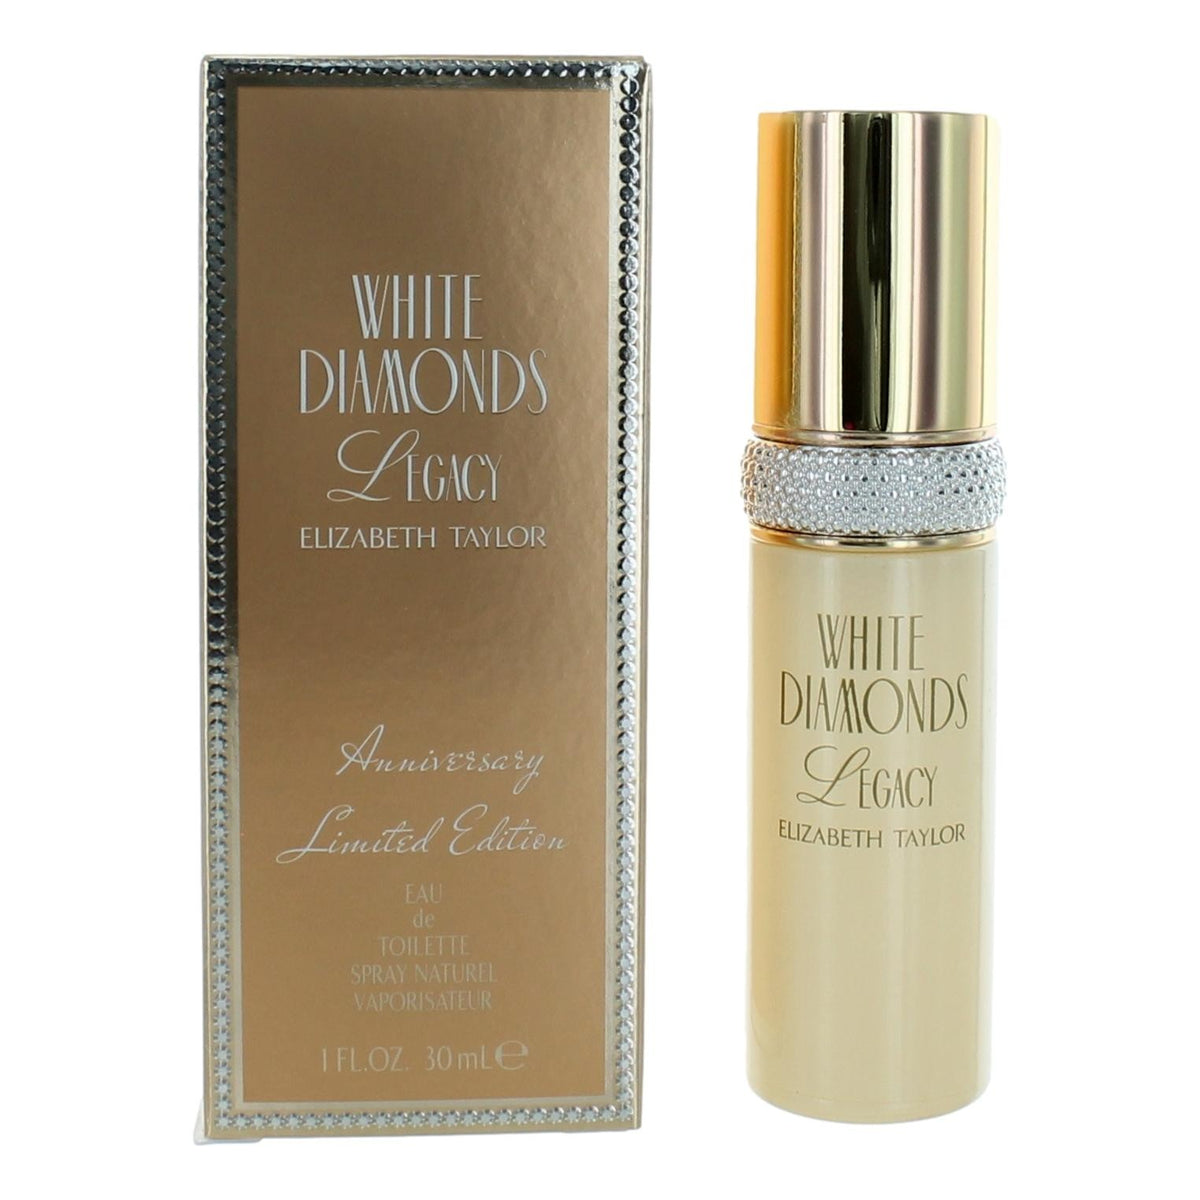 White Diamonds Legacy by Elizabeth Taylor, 1 oz Eau De Toilette Spray for Women